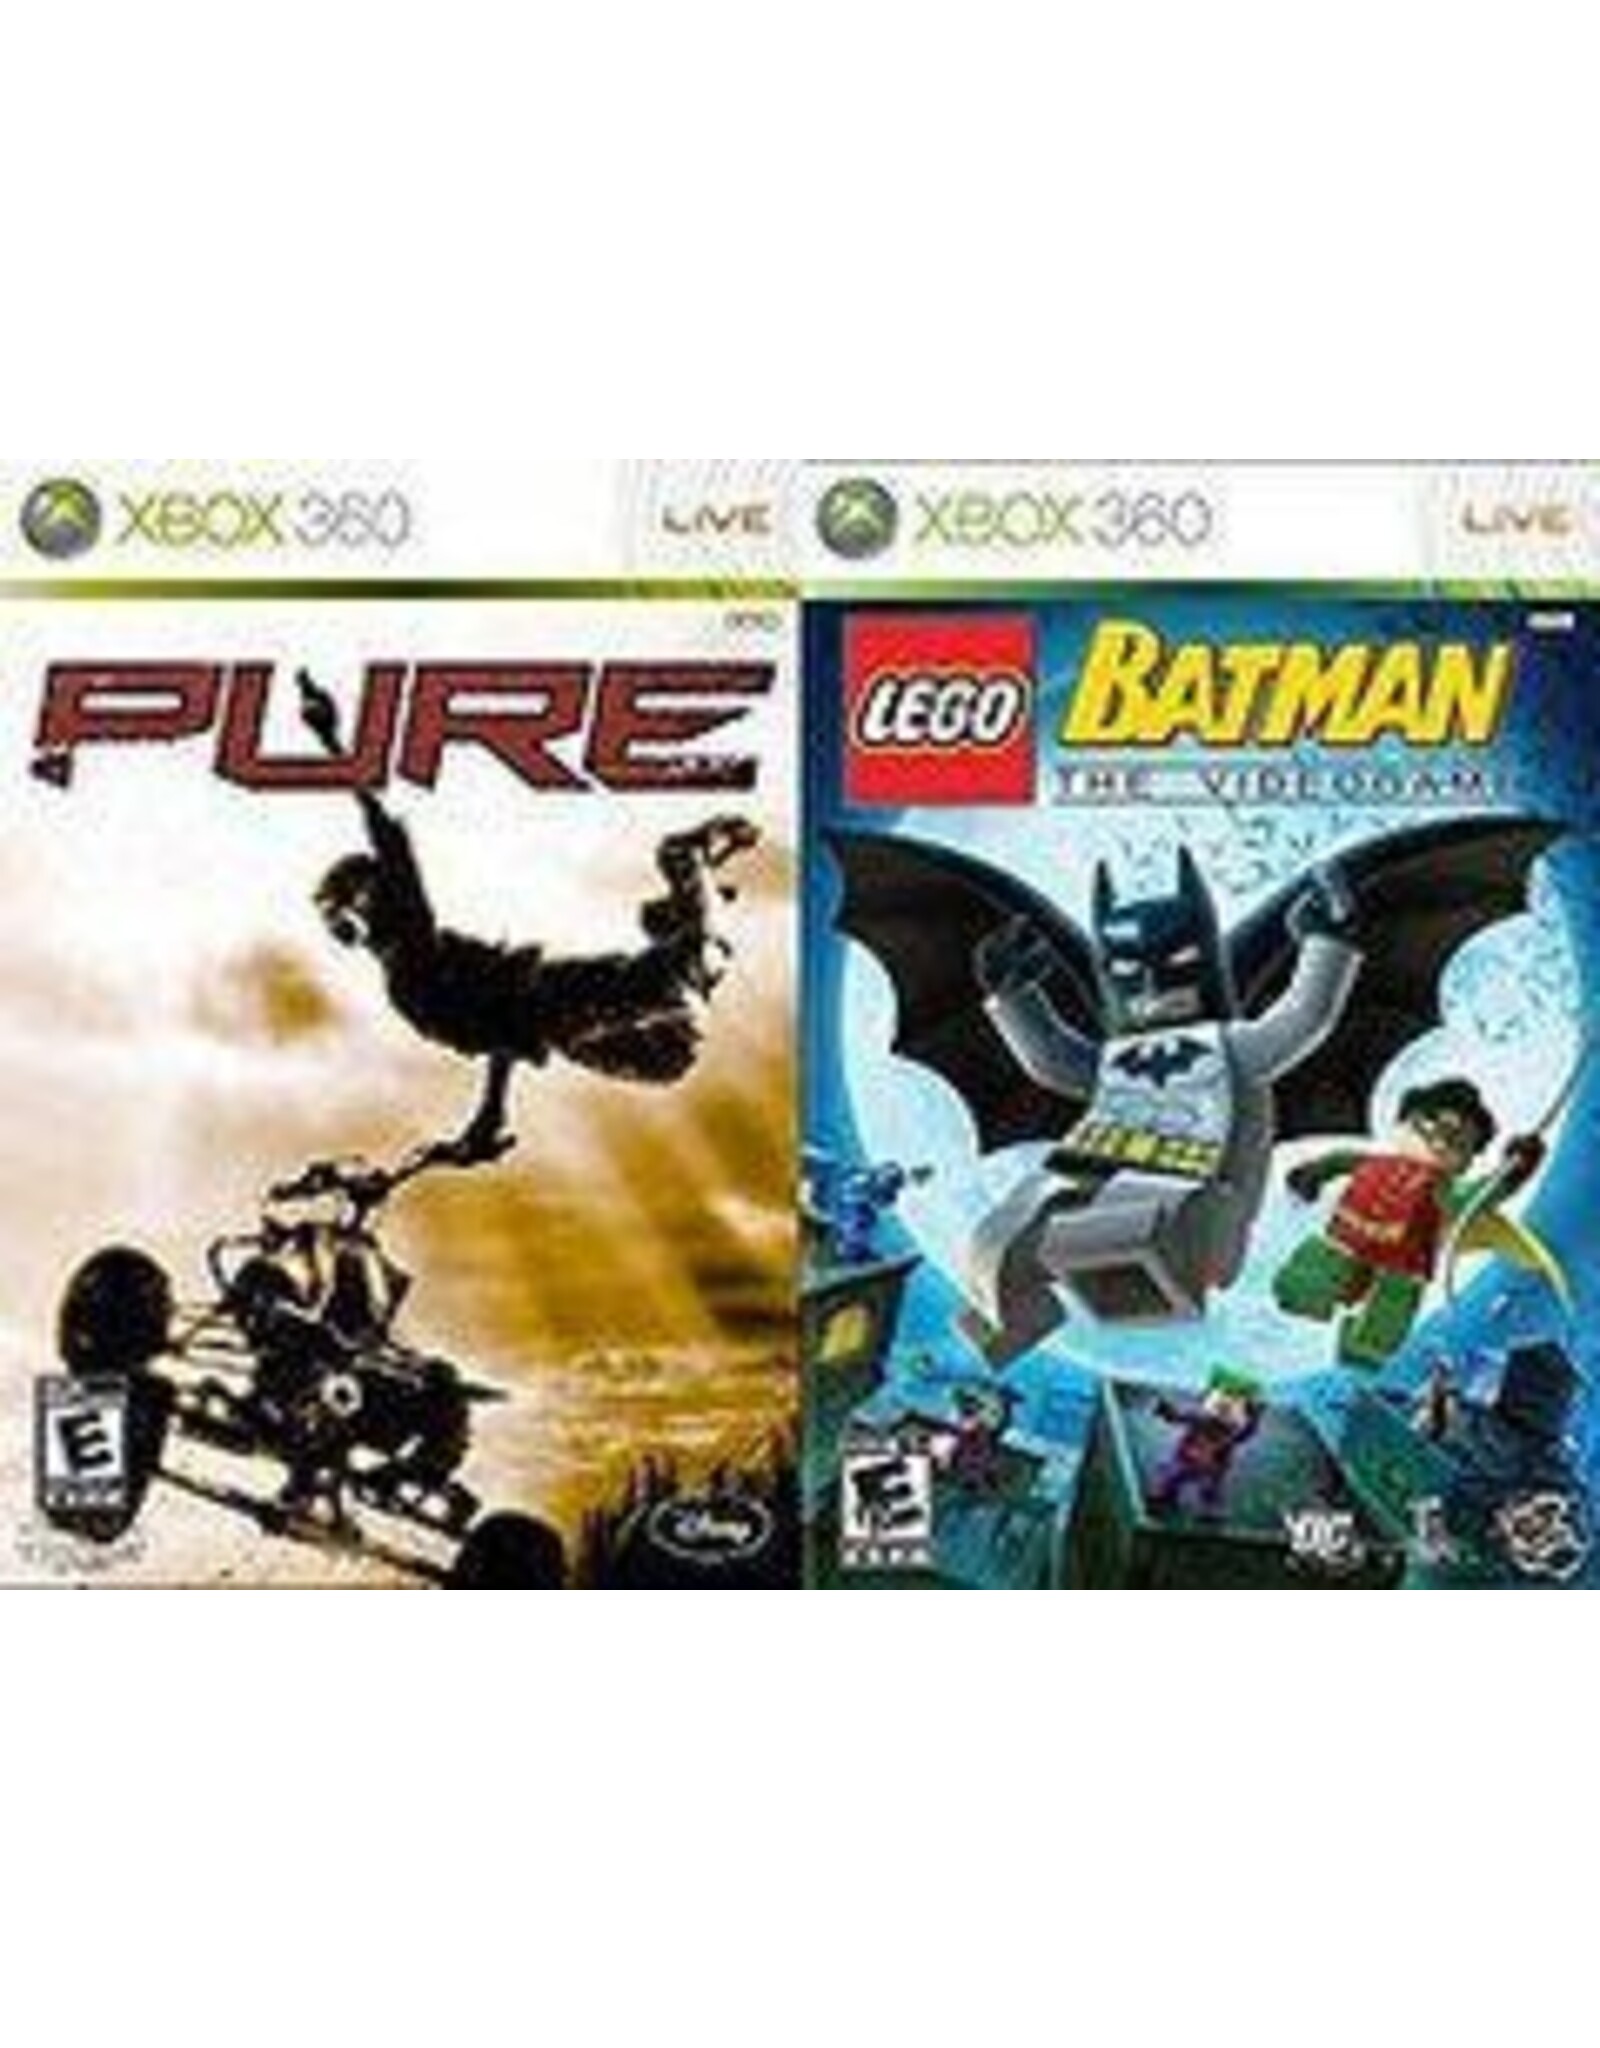 Xbox 360 LEGO Batman & Pure Double Pack (CiB)